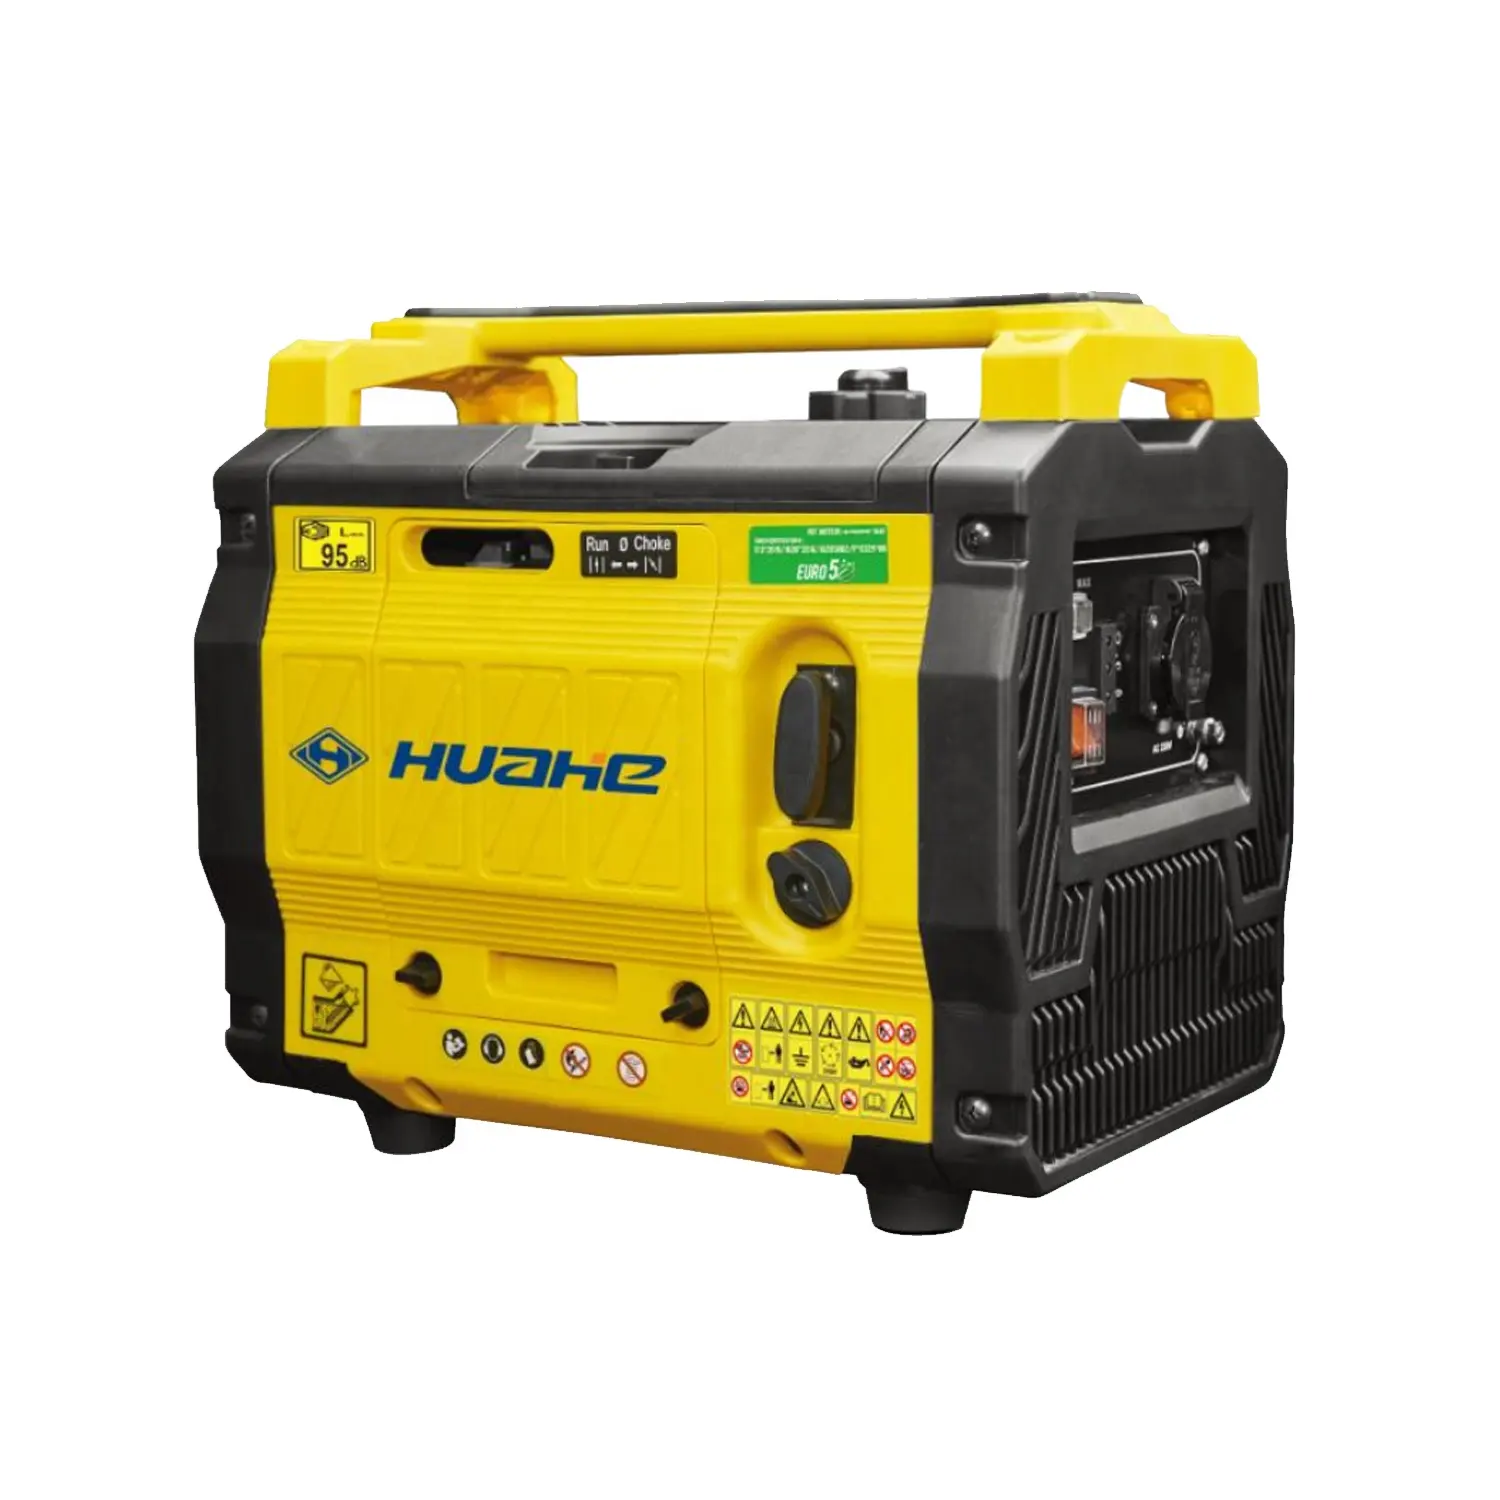 Huahe neues Produkt 1000 W Wechselrichter Benzin-Generator 220 V 50 Hz